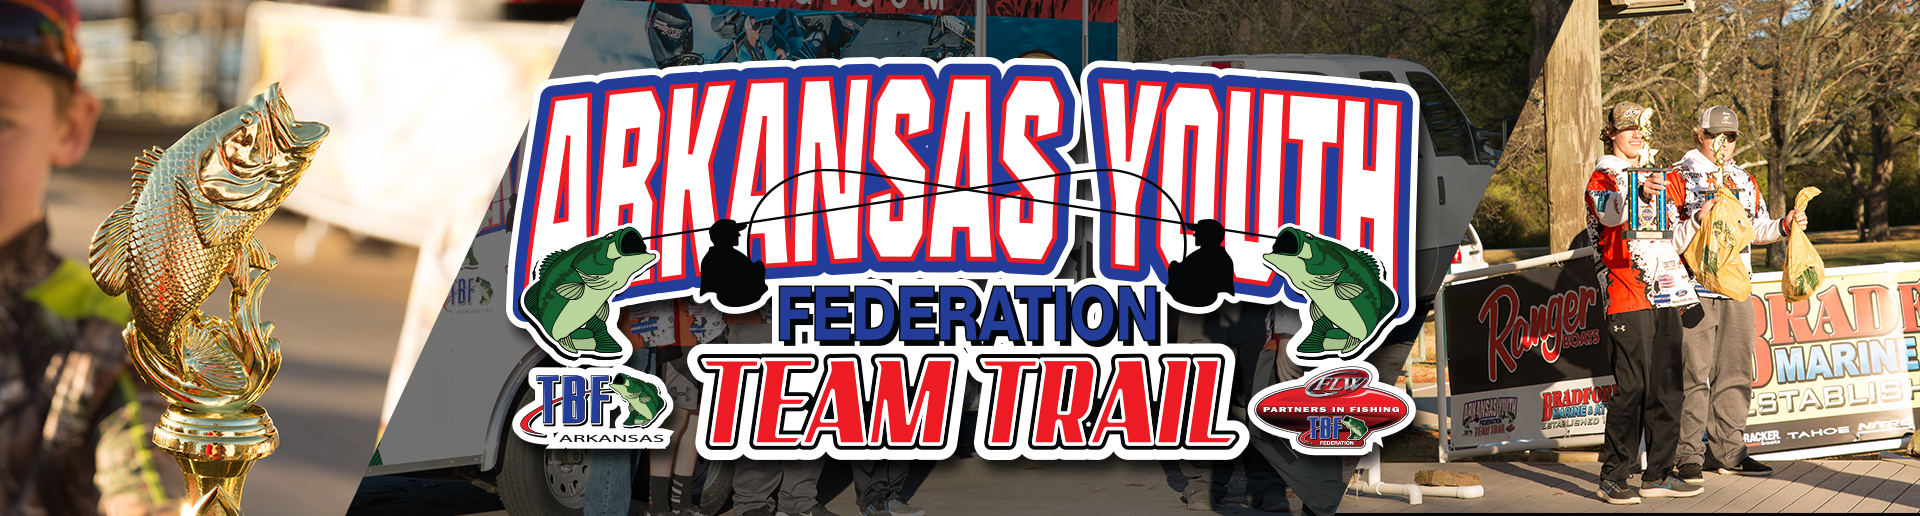 Arkansas Youth Federation Team Trail